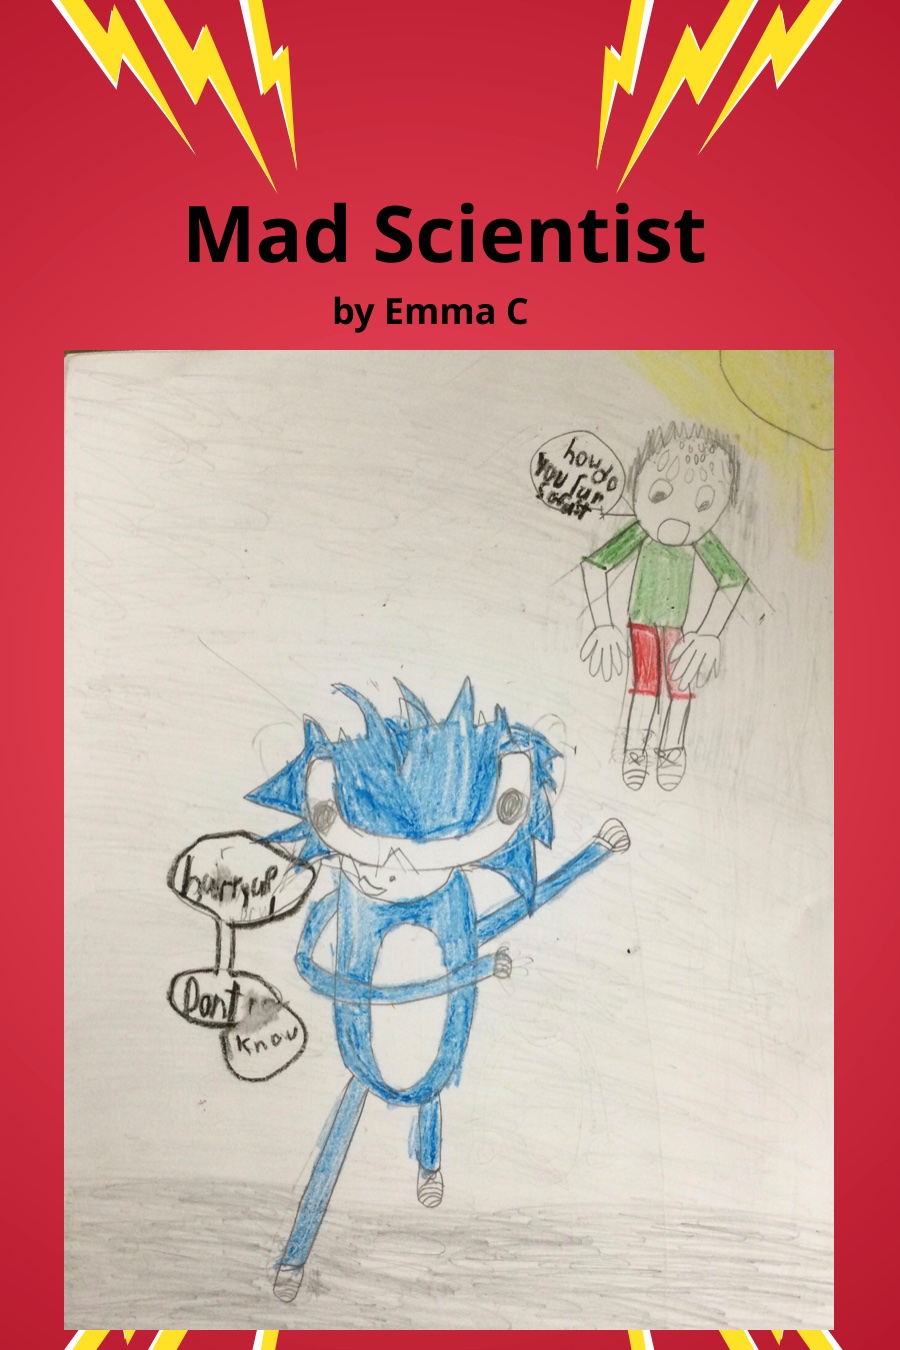 Mad Scientist by Emma C